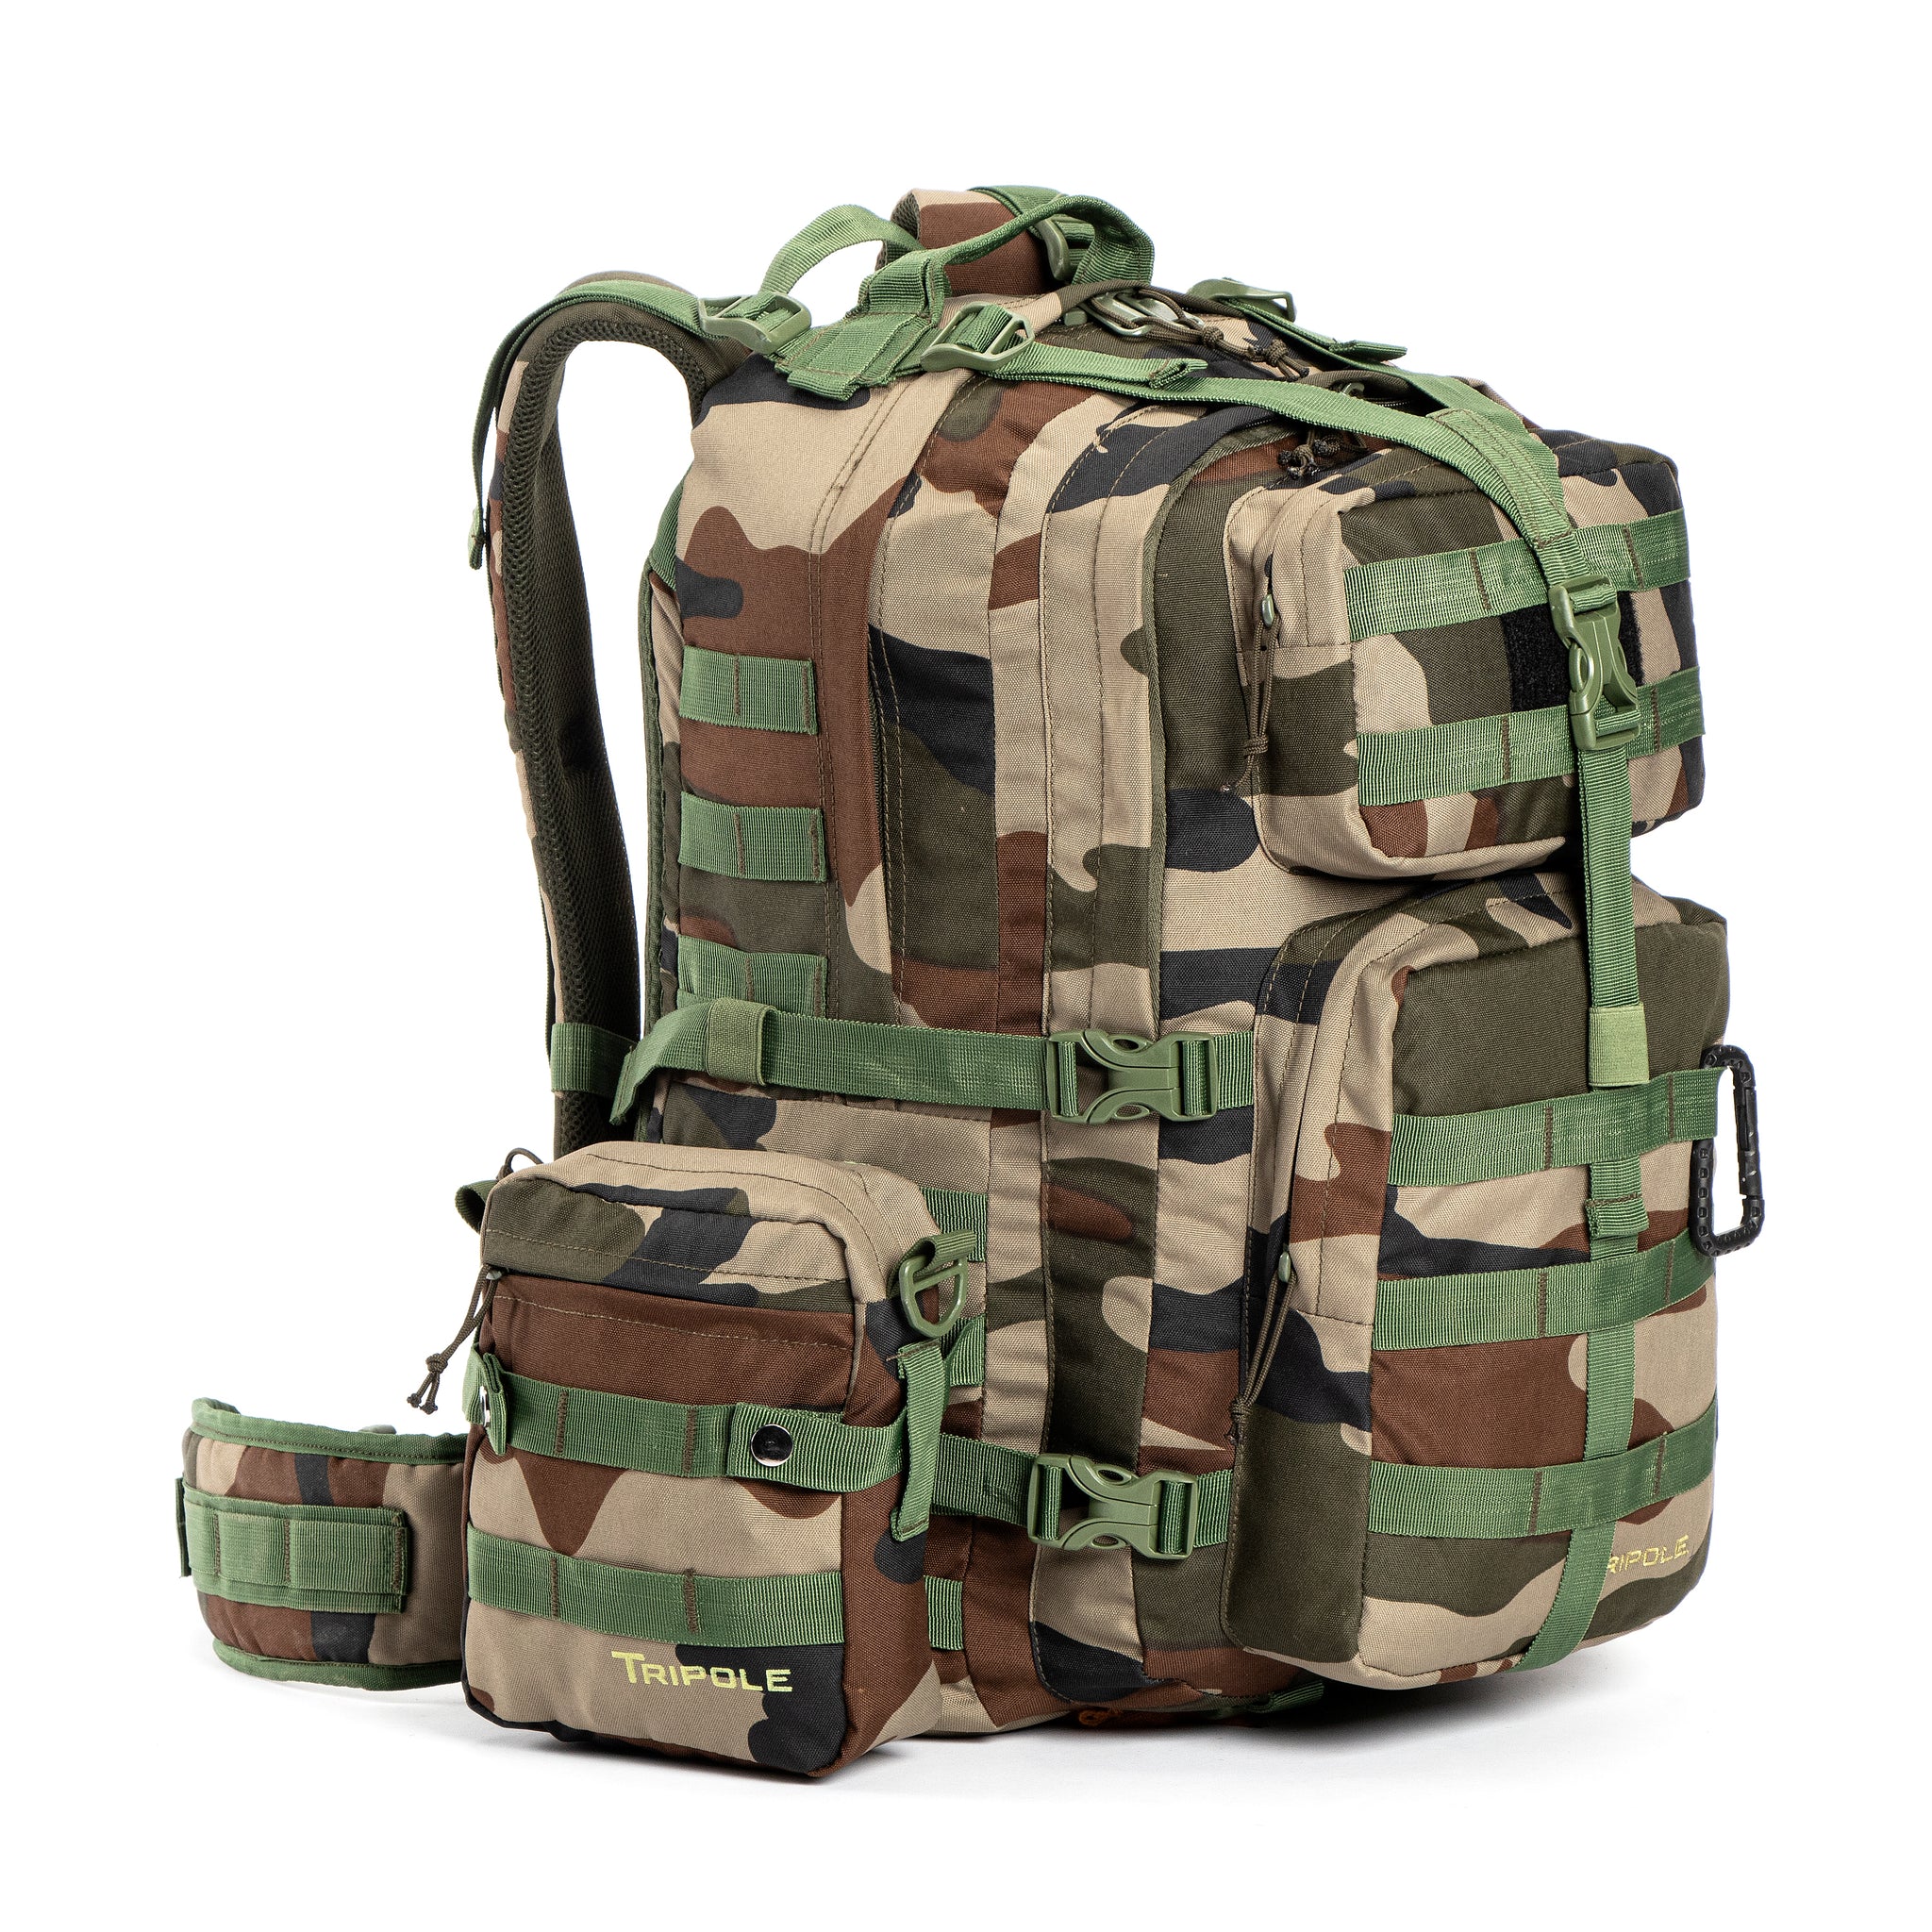 Buy MacRaiL Military Print ultra light weight school bag college bag   City backpackTravel backpack Waterproof School Bag Multicolor 40 L  Online at Best Prices in India  JioMart